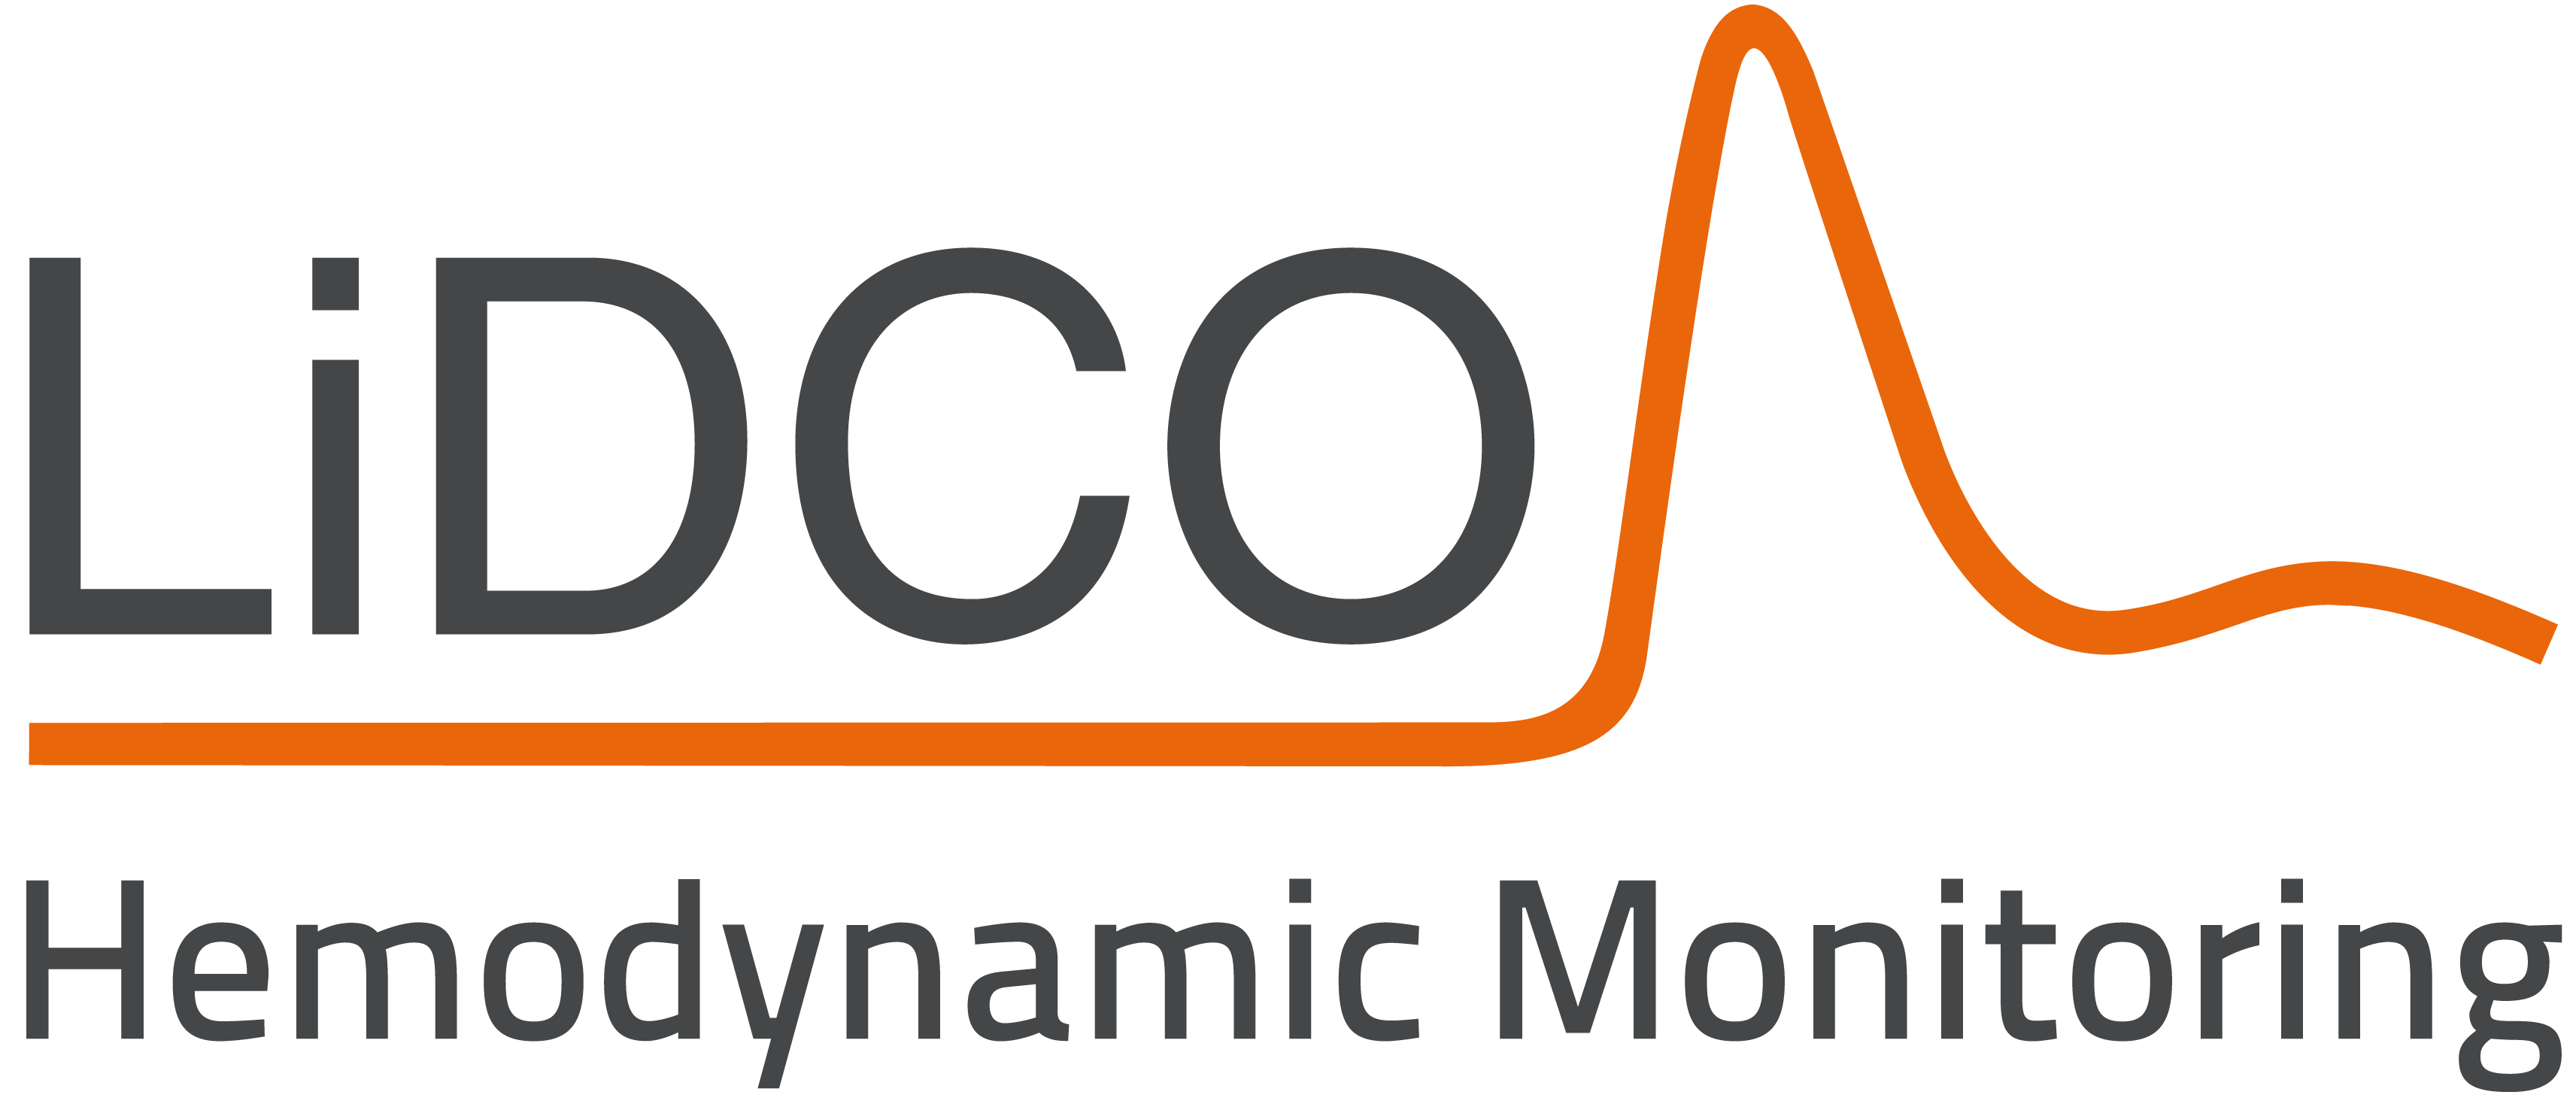 LiDCO Group Plc (LID.L) logo